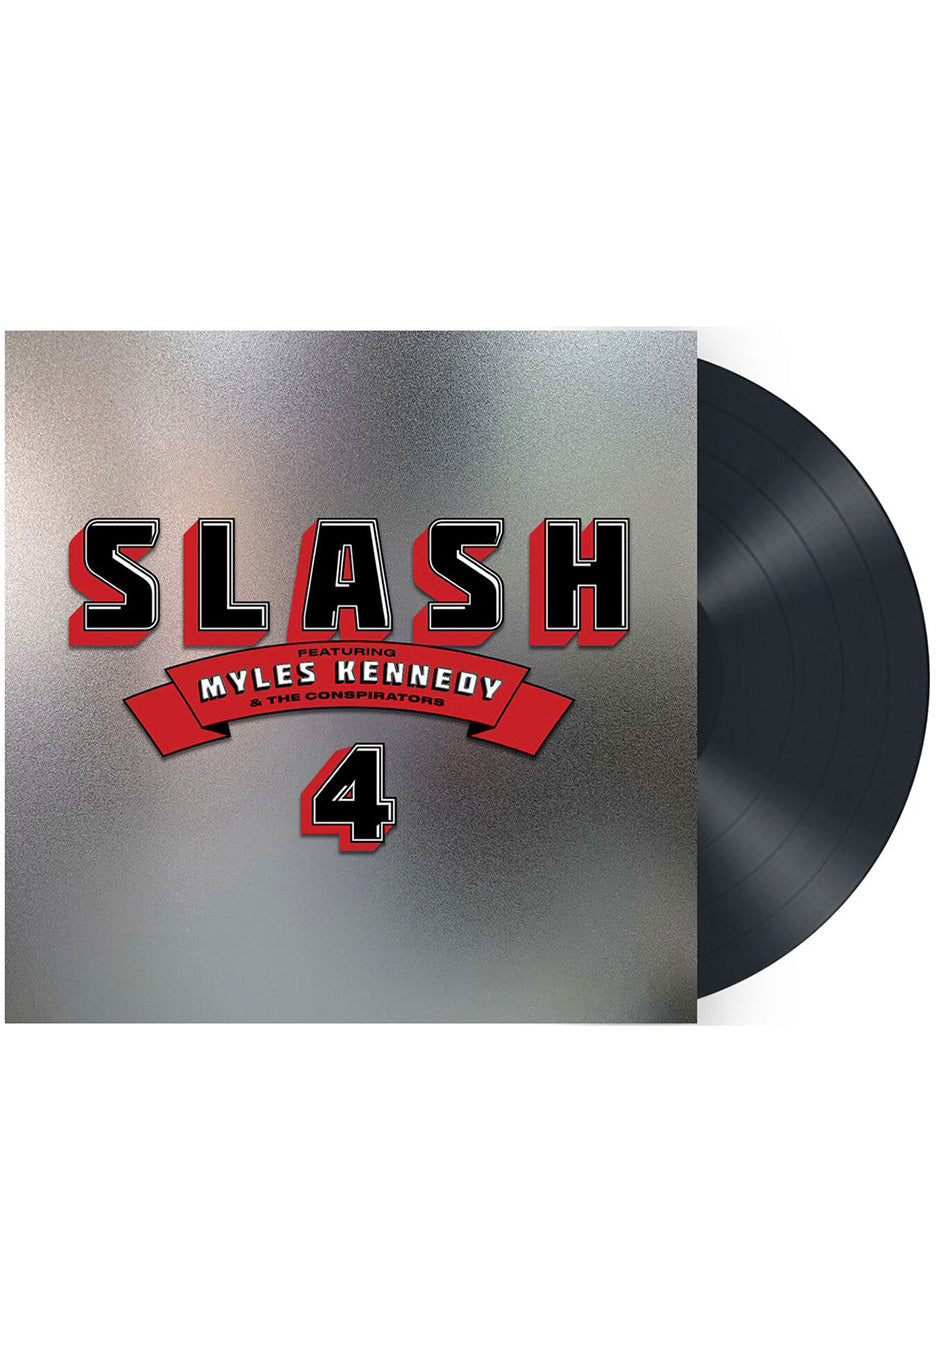 Slash Feat. Myles Kennedy & The Conspirators - 4 - Vinyl